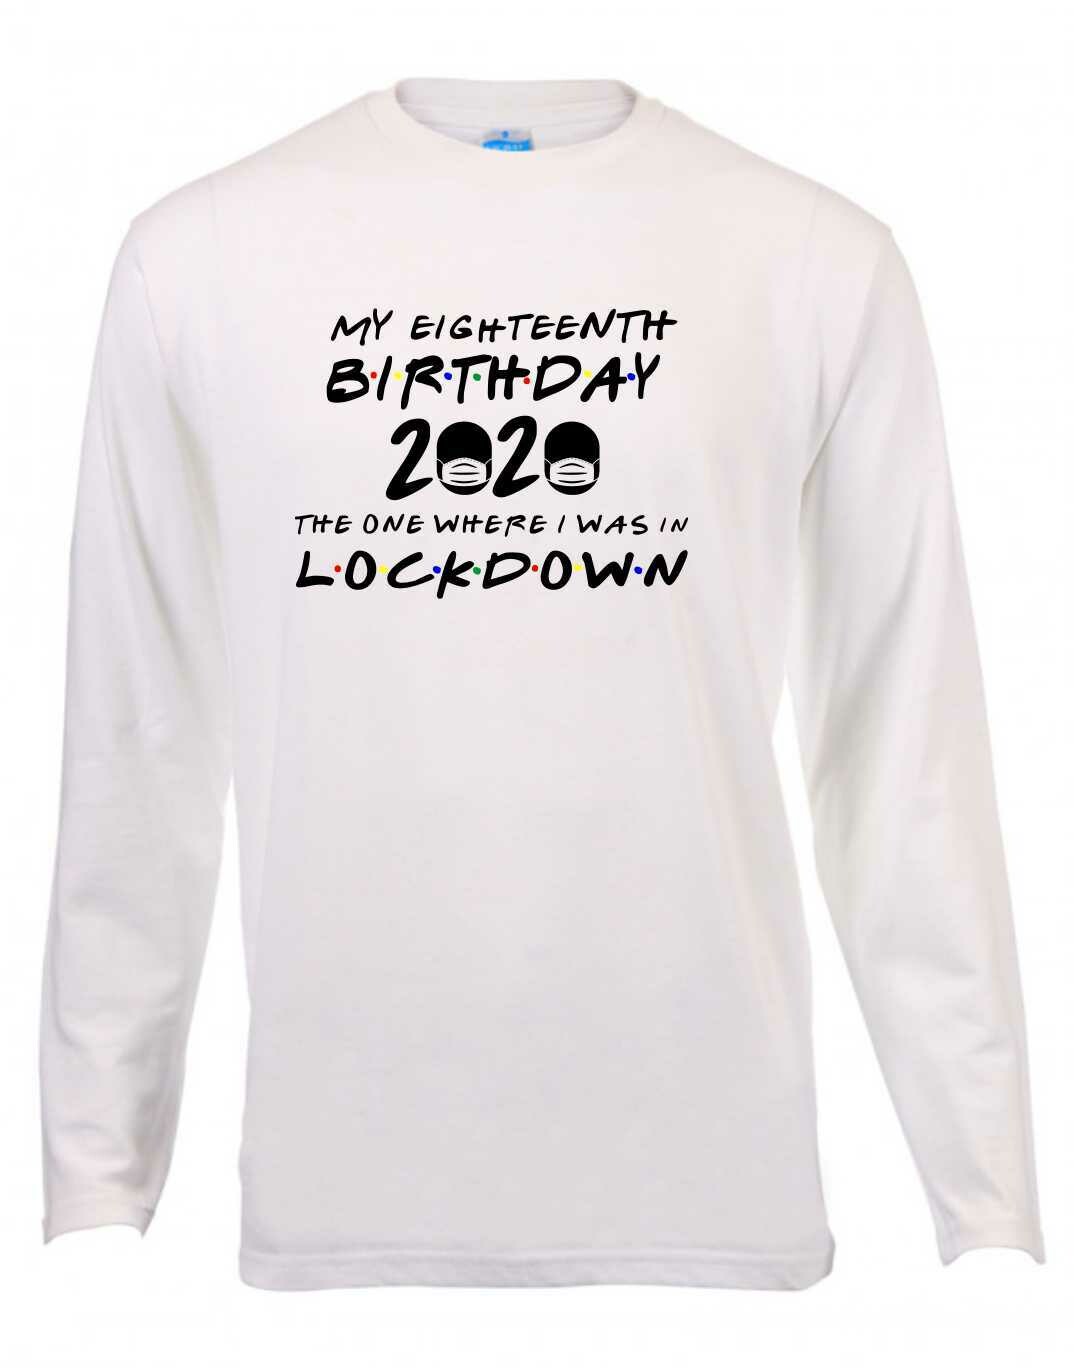 Your Birthday T-Shirt Long Sleeve (S-2XL)